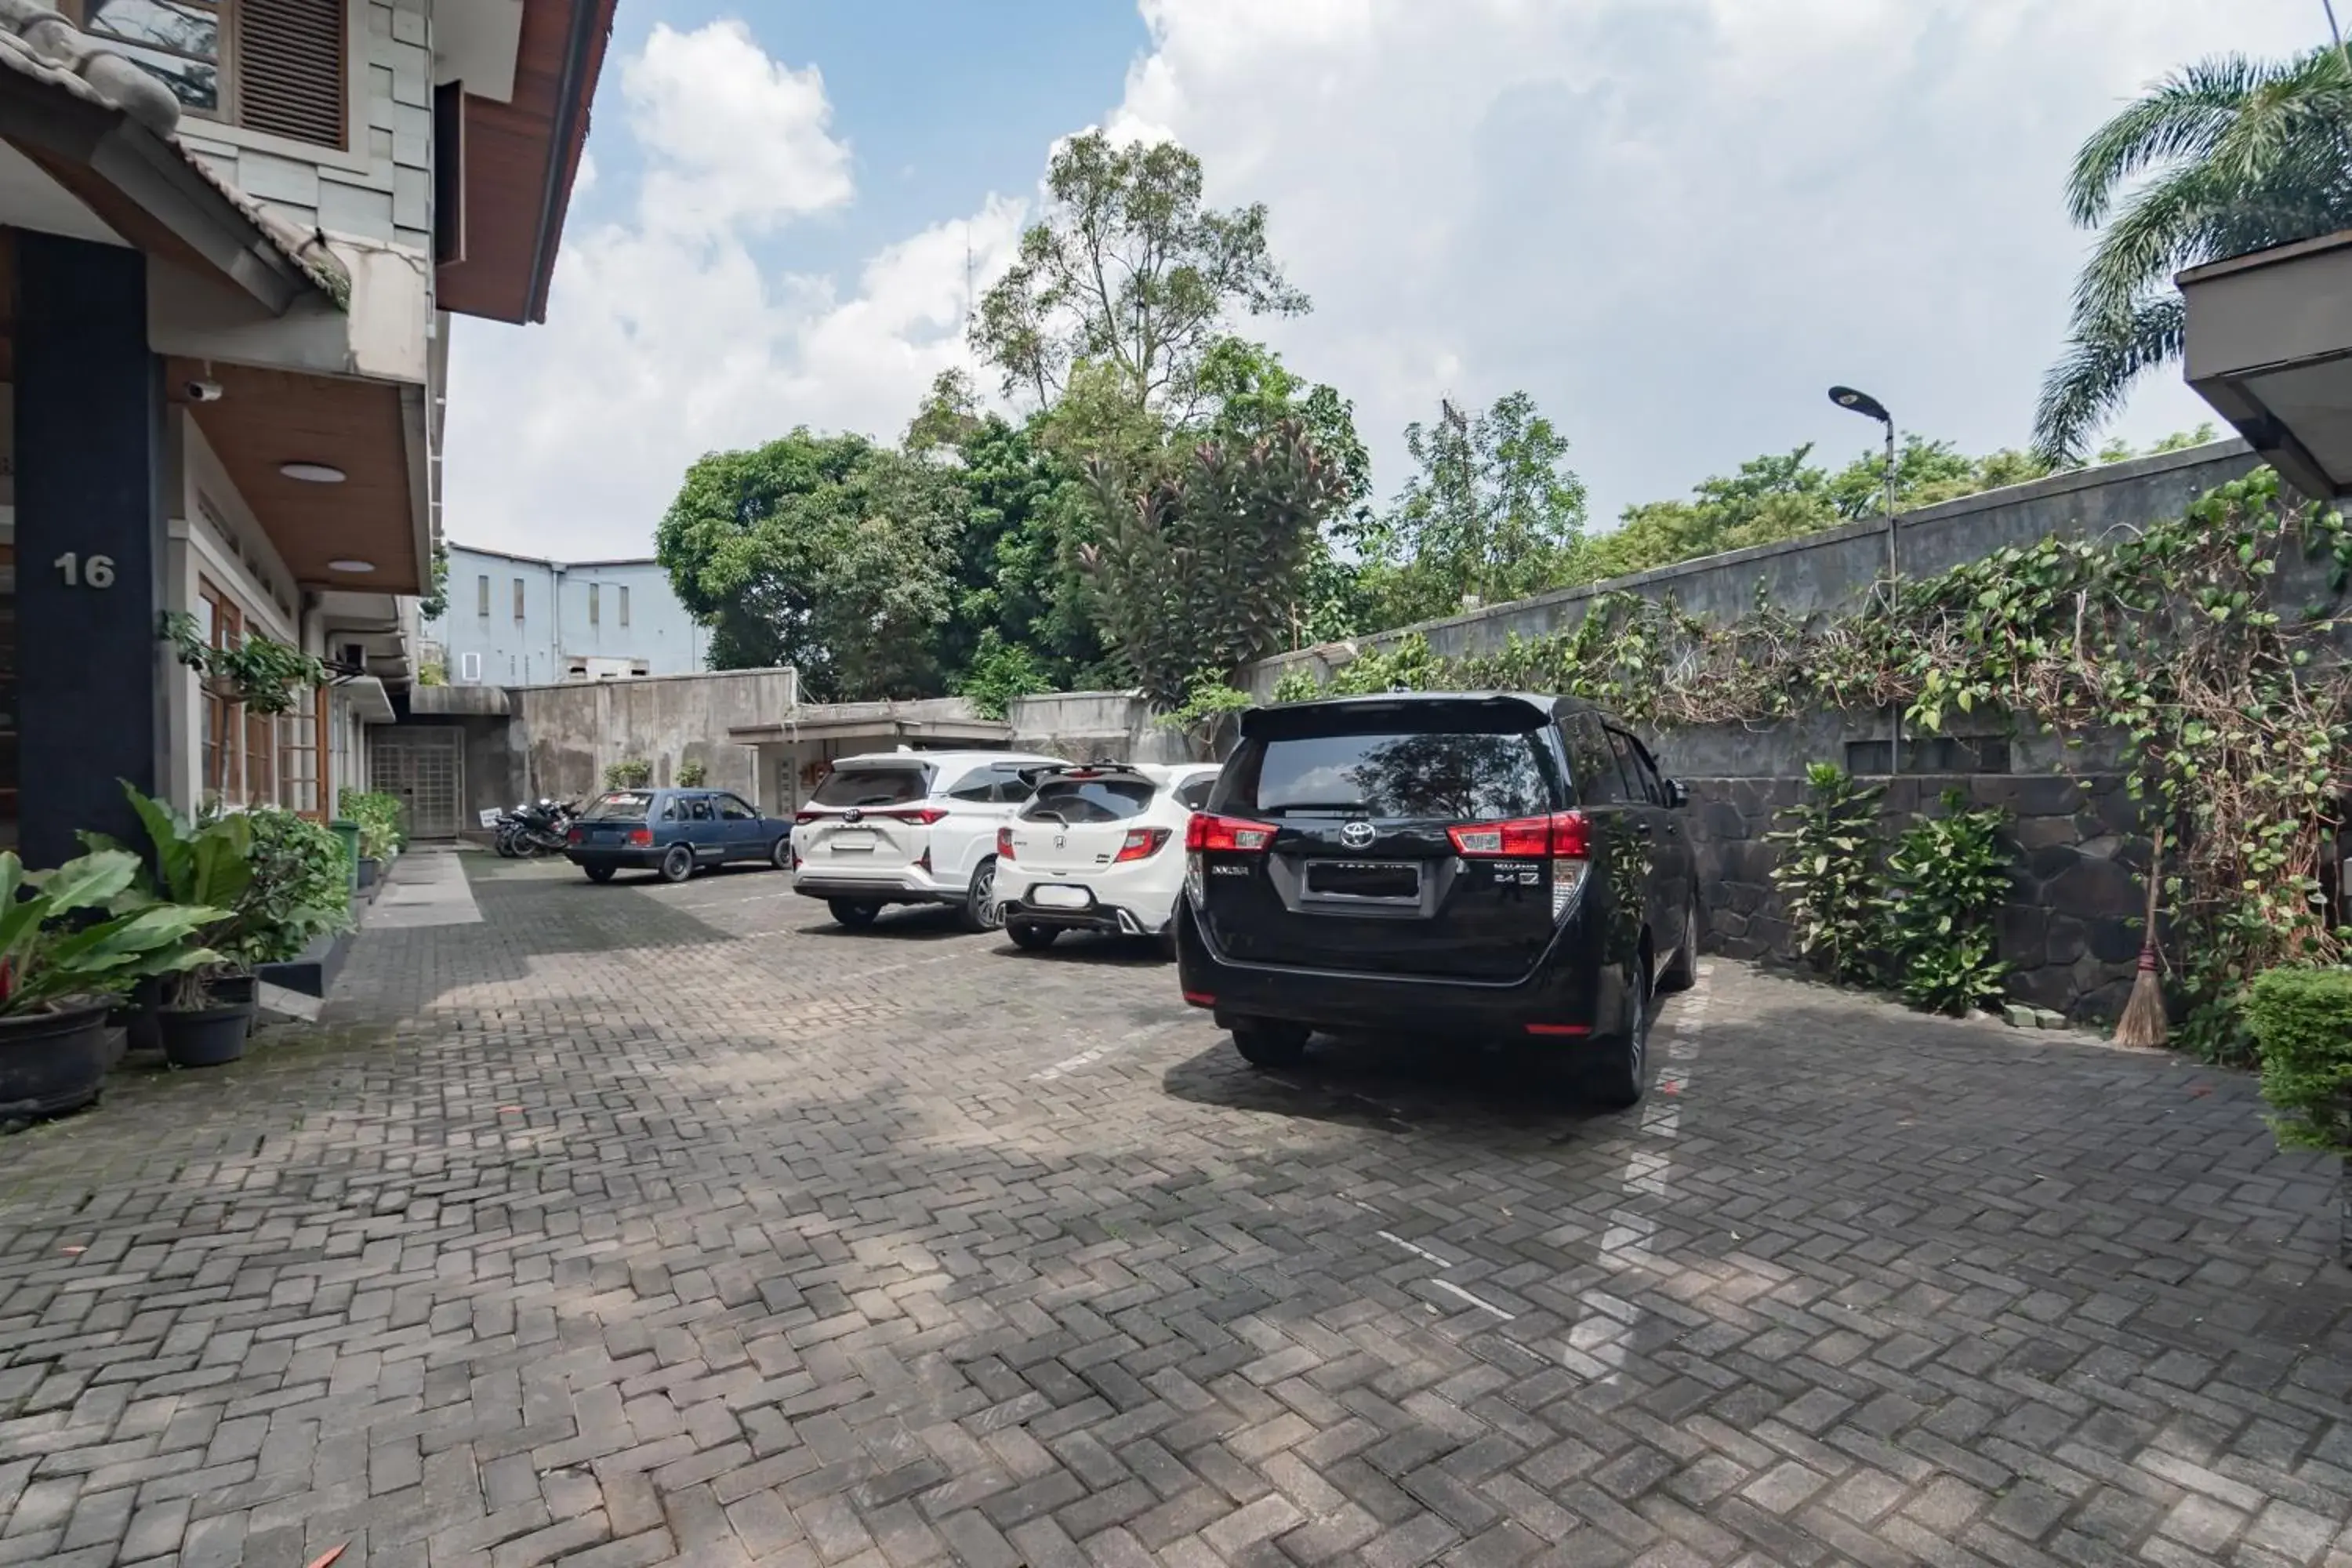 Parking in RedDoorz near Institut Teknologi Bandung 2